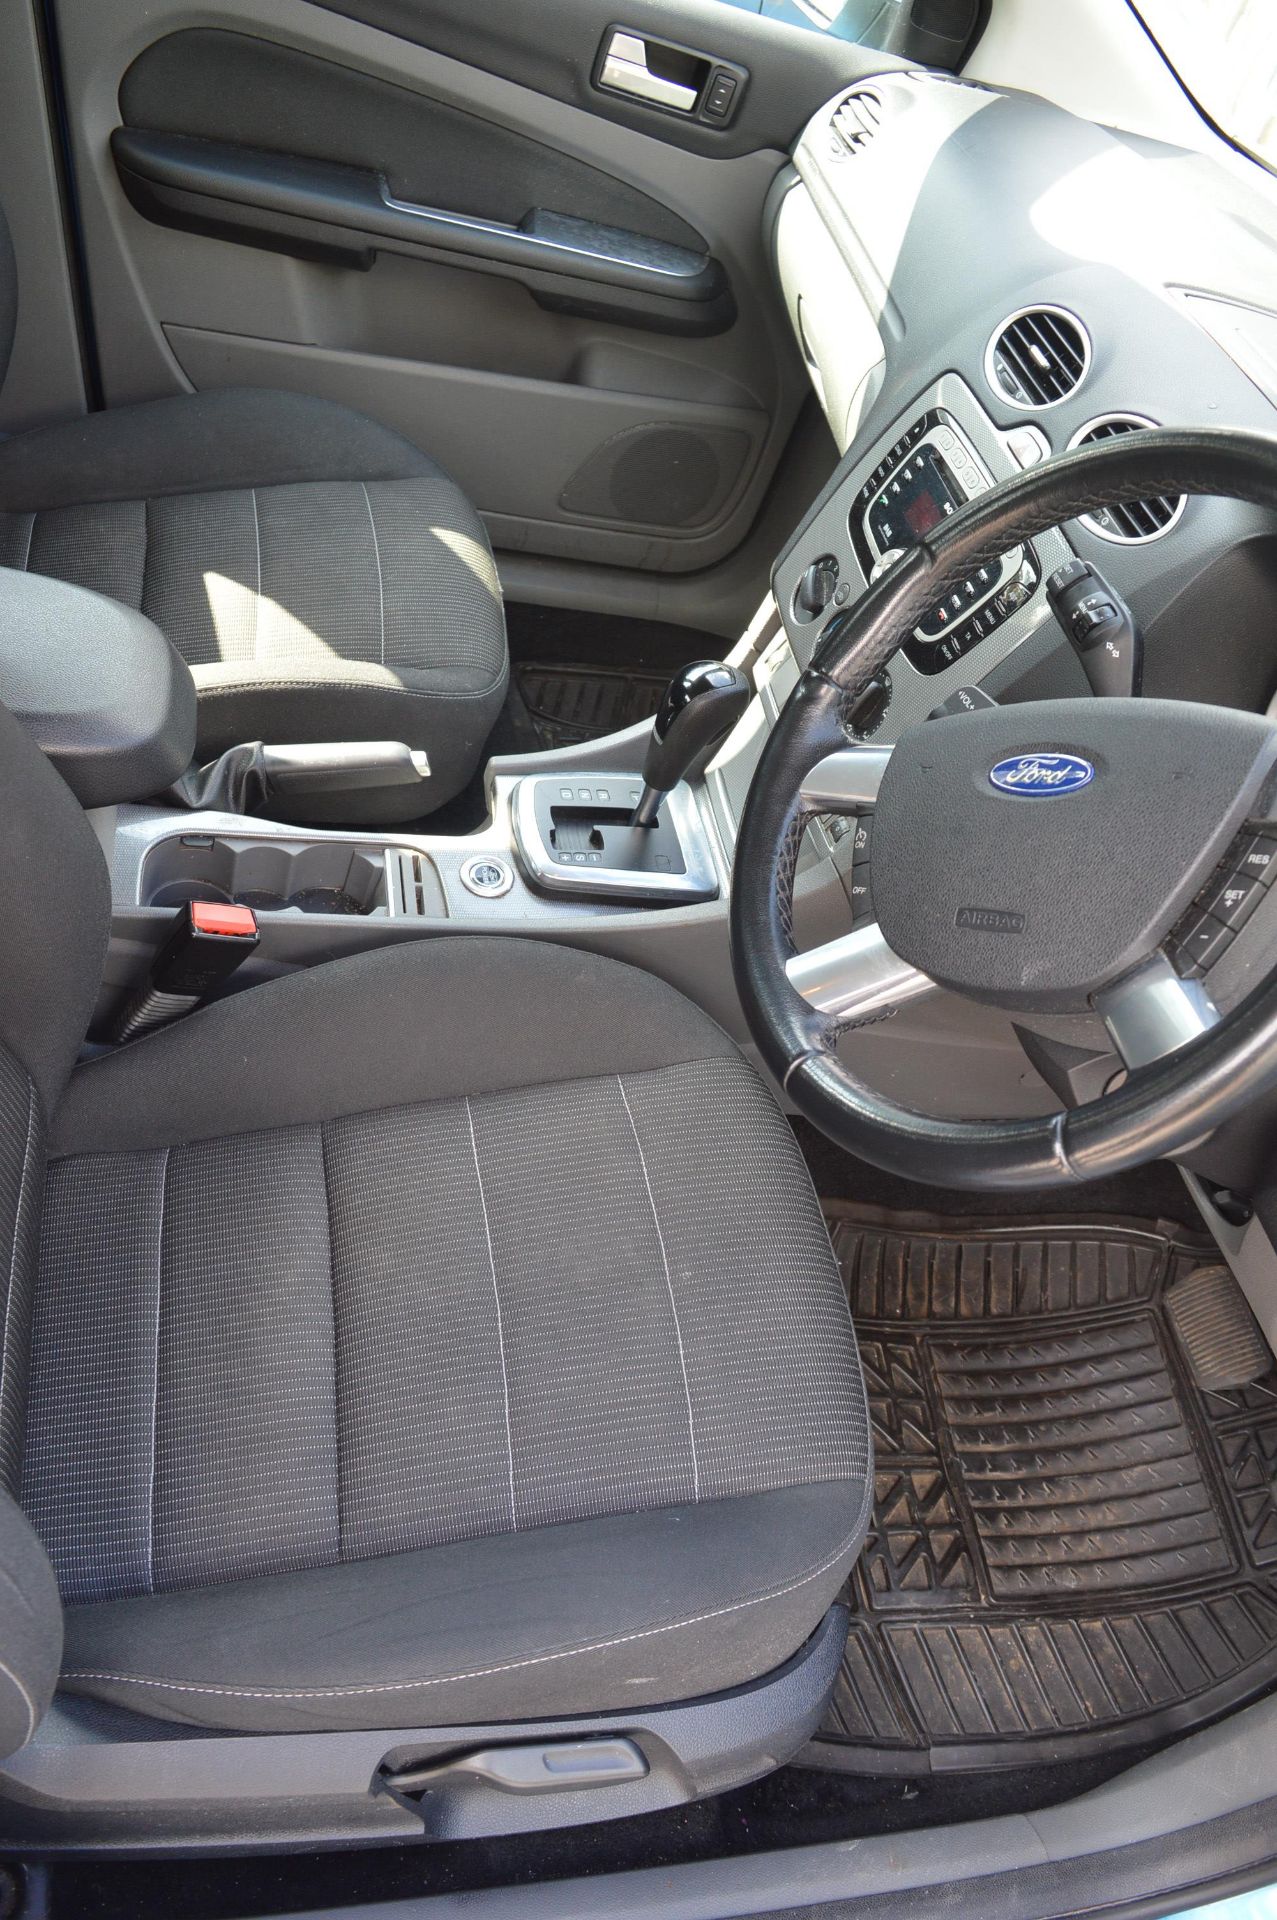 Ford Focus Titanium 1.6 Automatic Reg:LT10 LTZ, MOT: March 2020 - Full Service History - Bild 3 aus 4